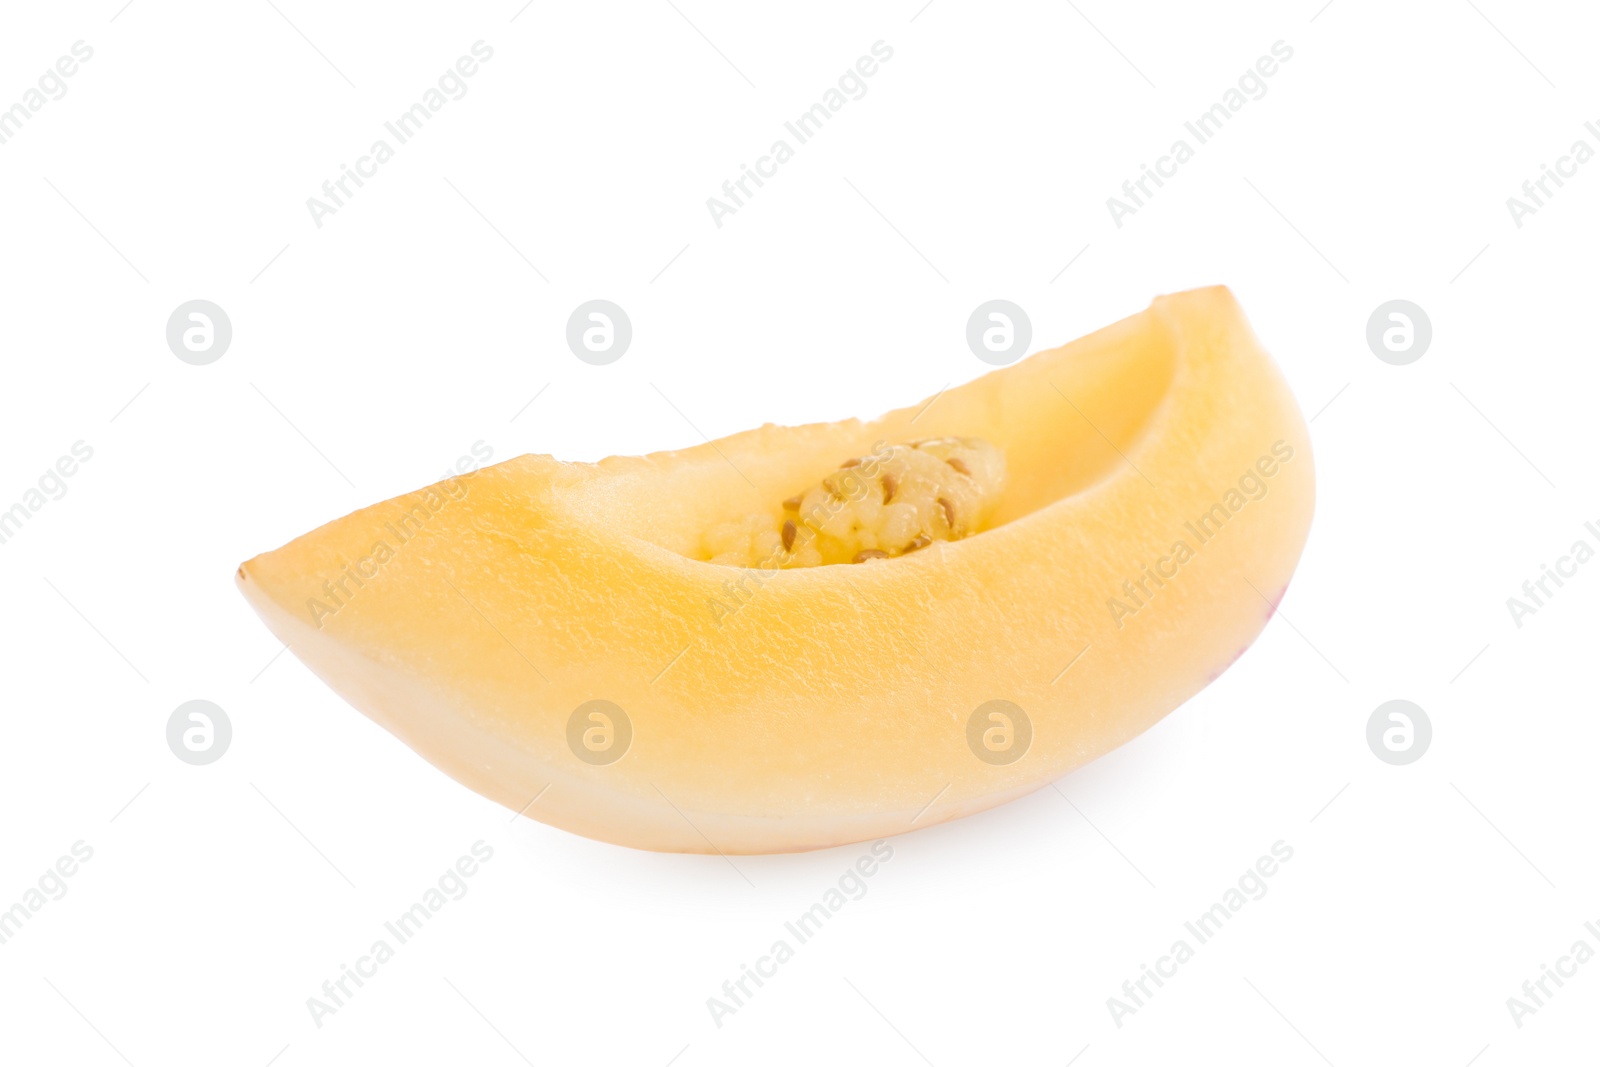 Photo of Slice of fresh ripe pepino melon isolated on white